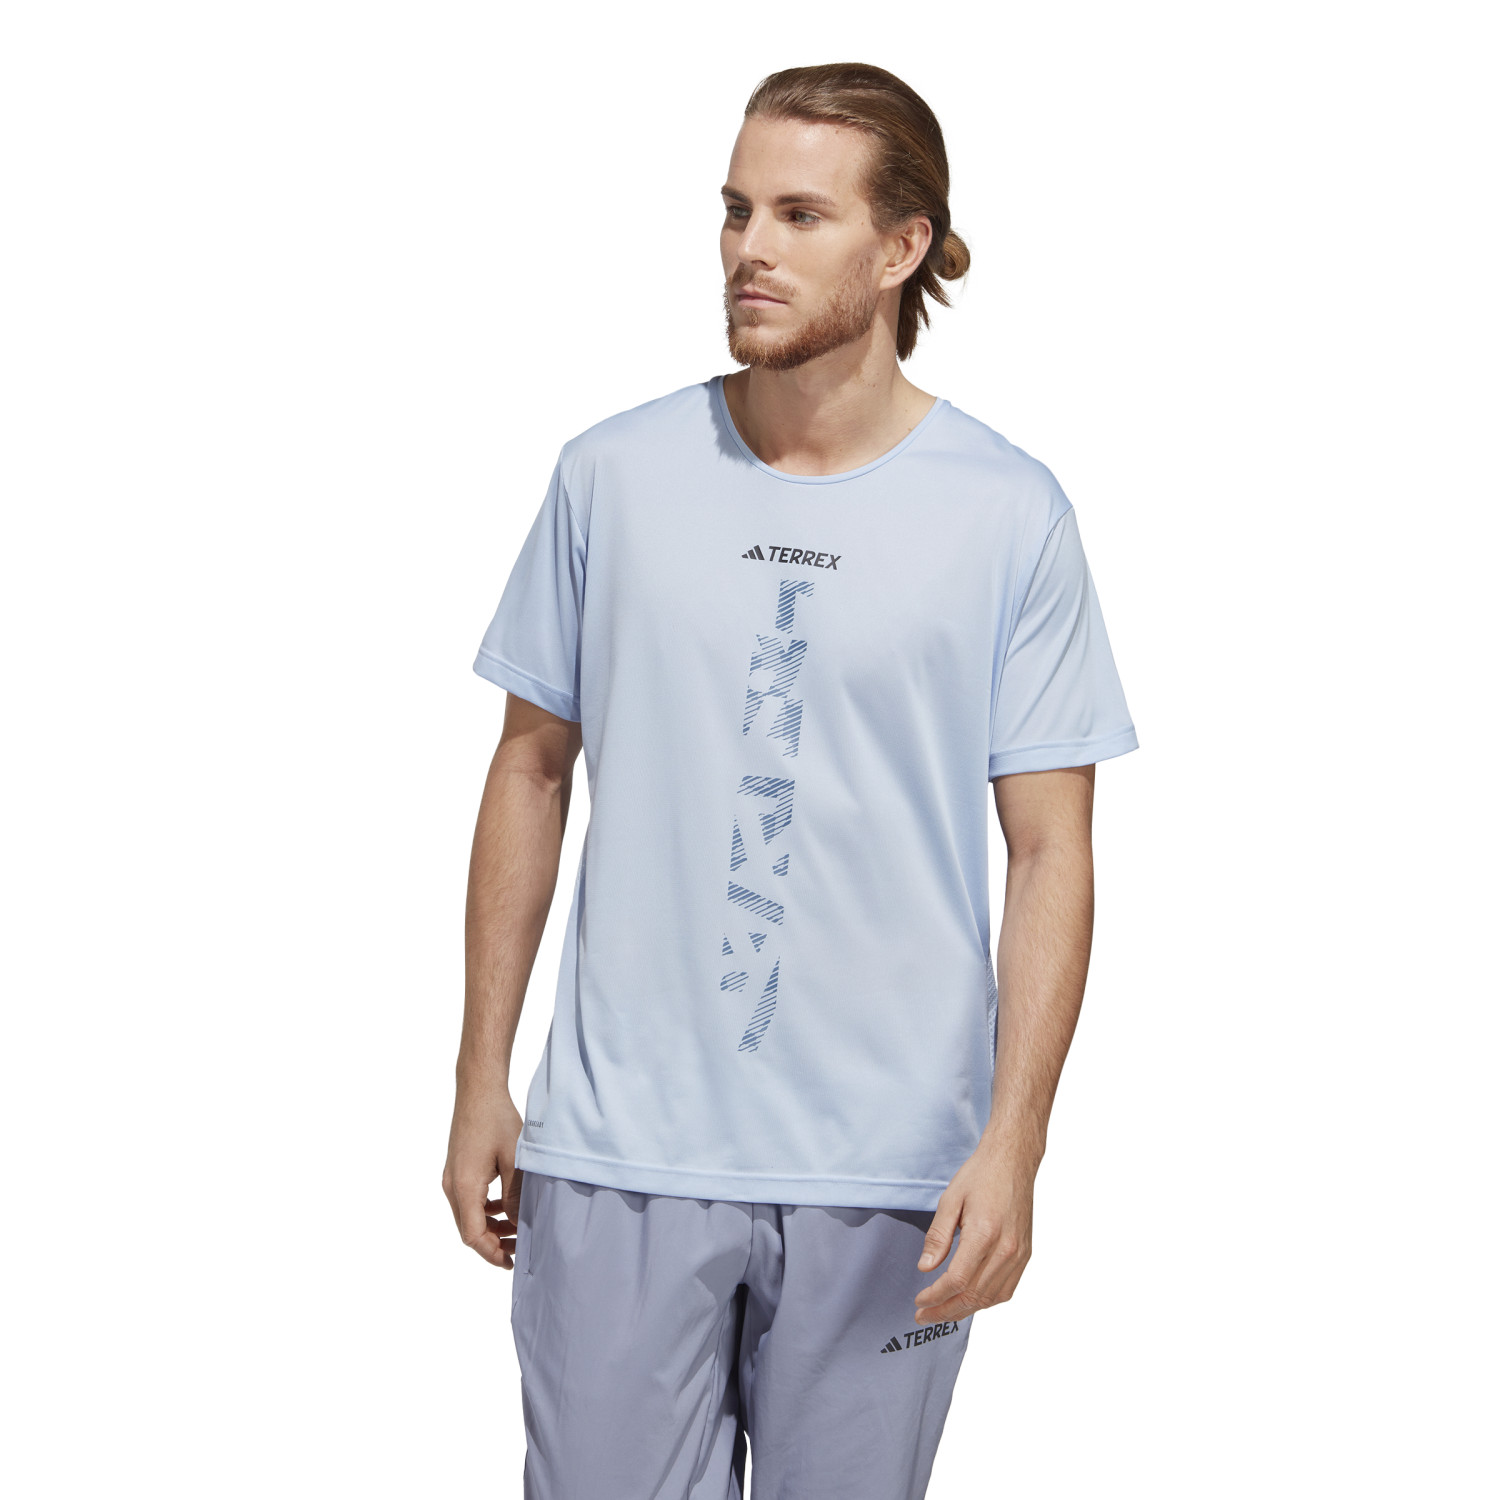 Adidas - AGR Shirt Men T-Shirt | doorout.com